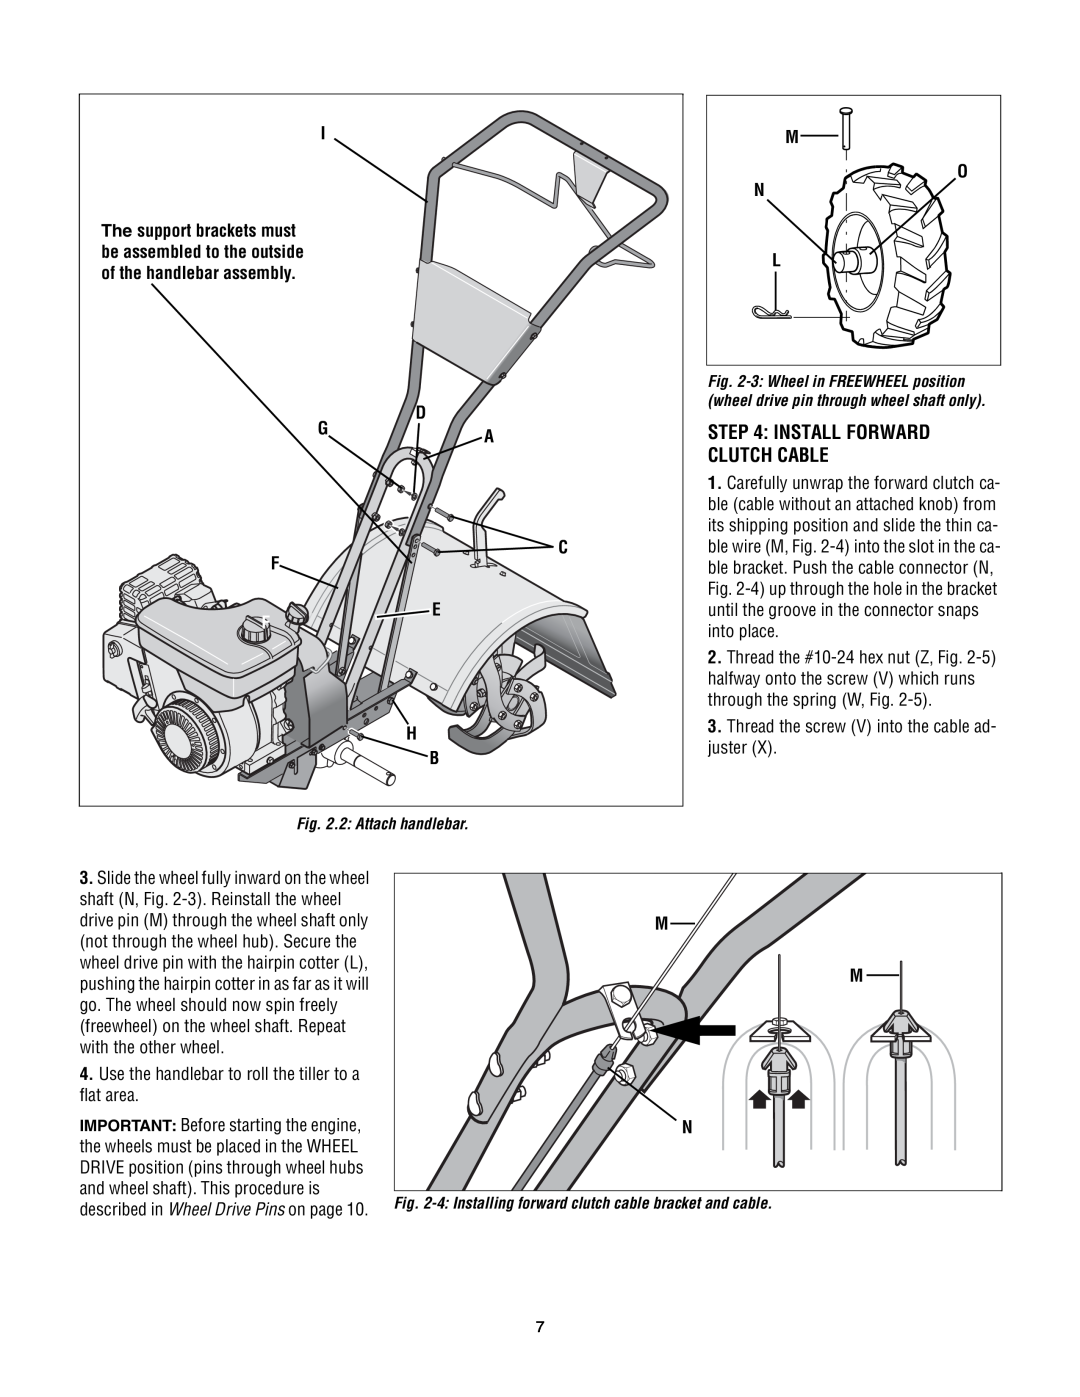 Troy-Bilt Super Bronco manual D G F E, Install Forward Clutch Cable, M M N, 2 Attach handlebar 